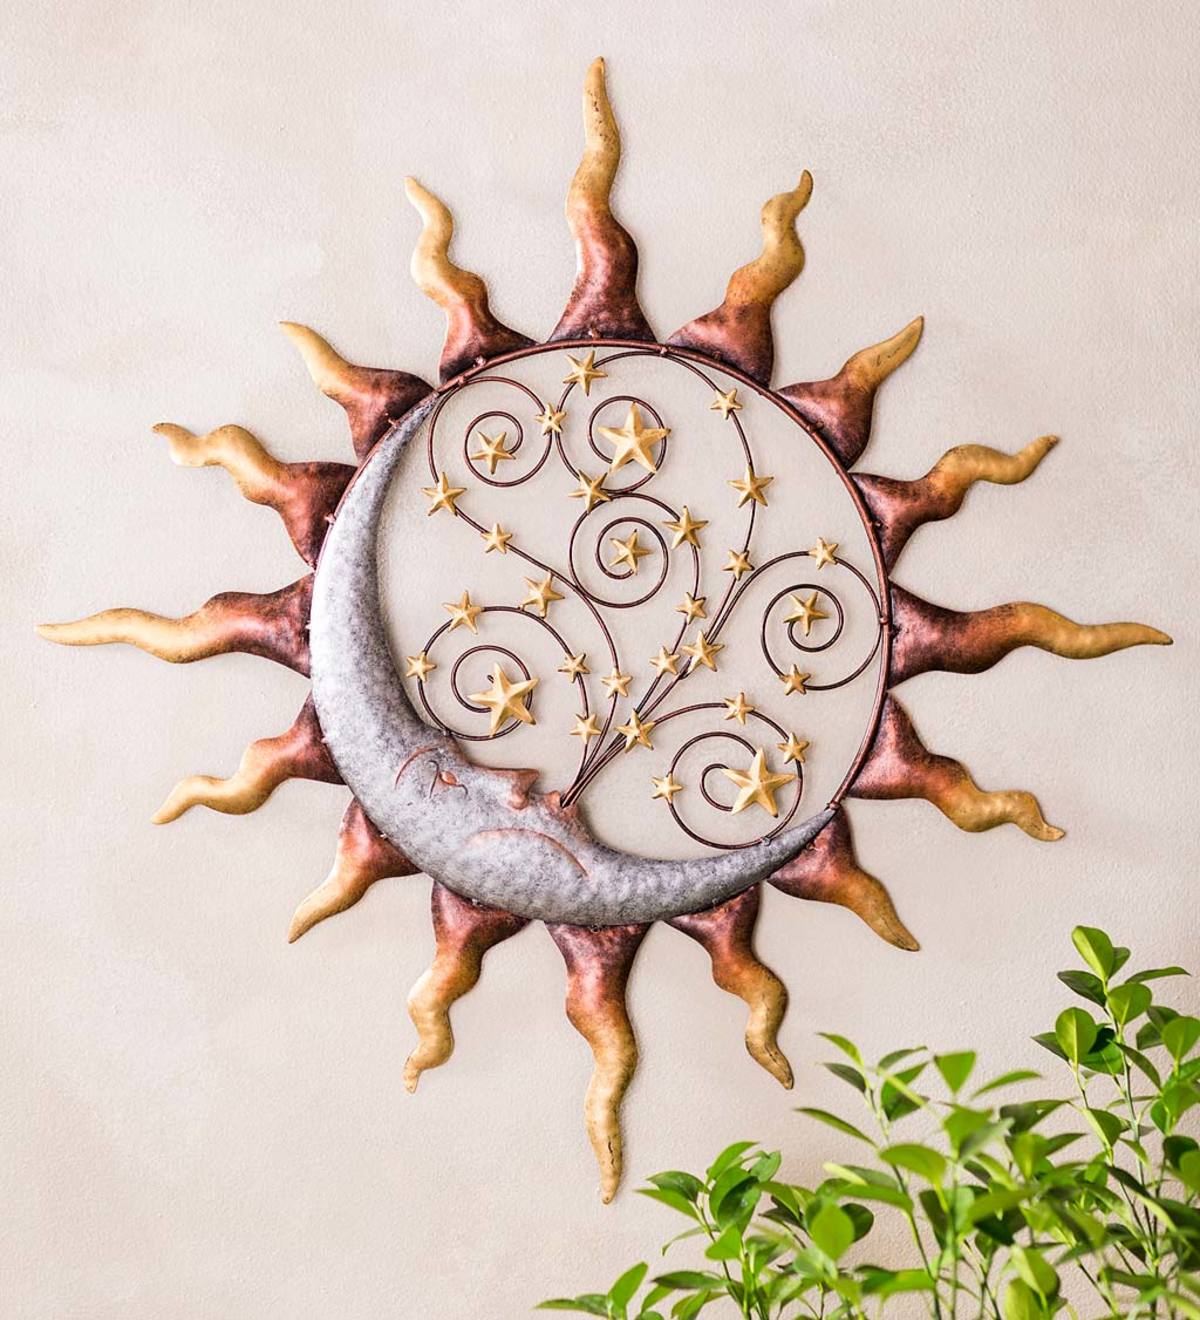 12" by 9" Handmade Sun and Moon Indoor Outdoor Original Wall Art